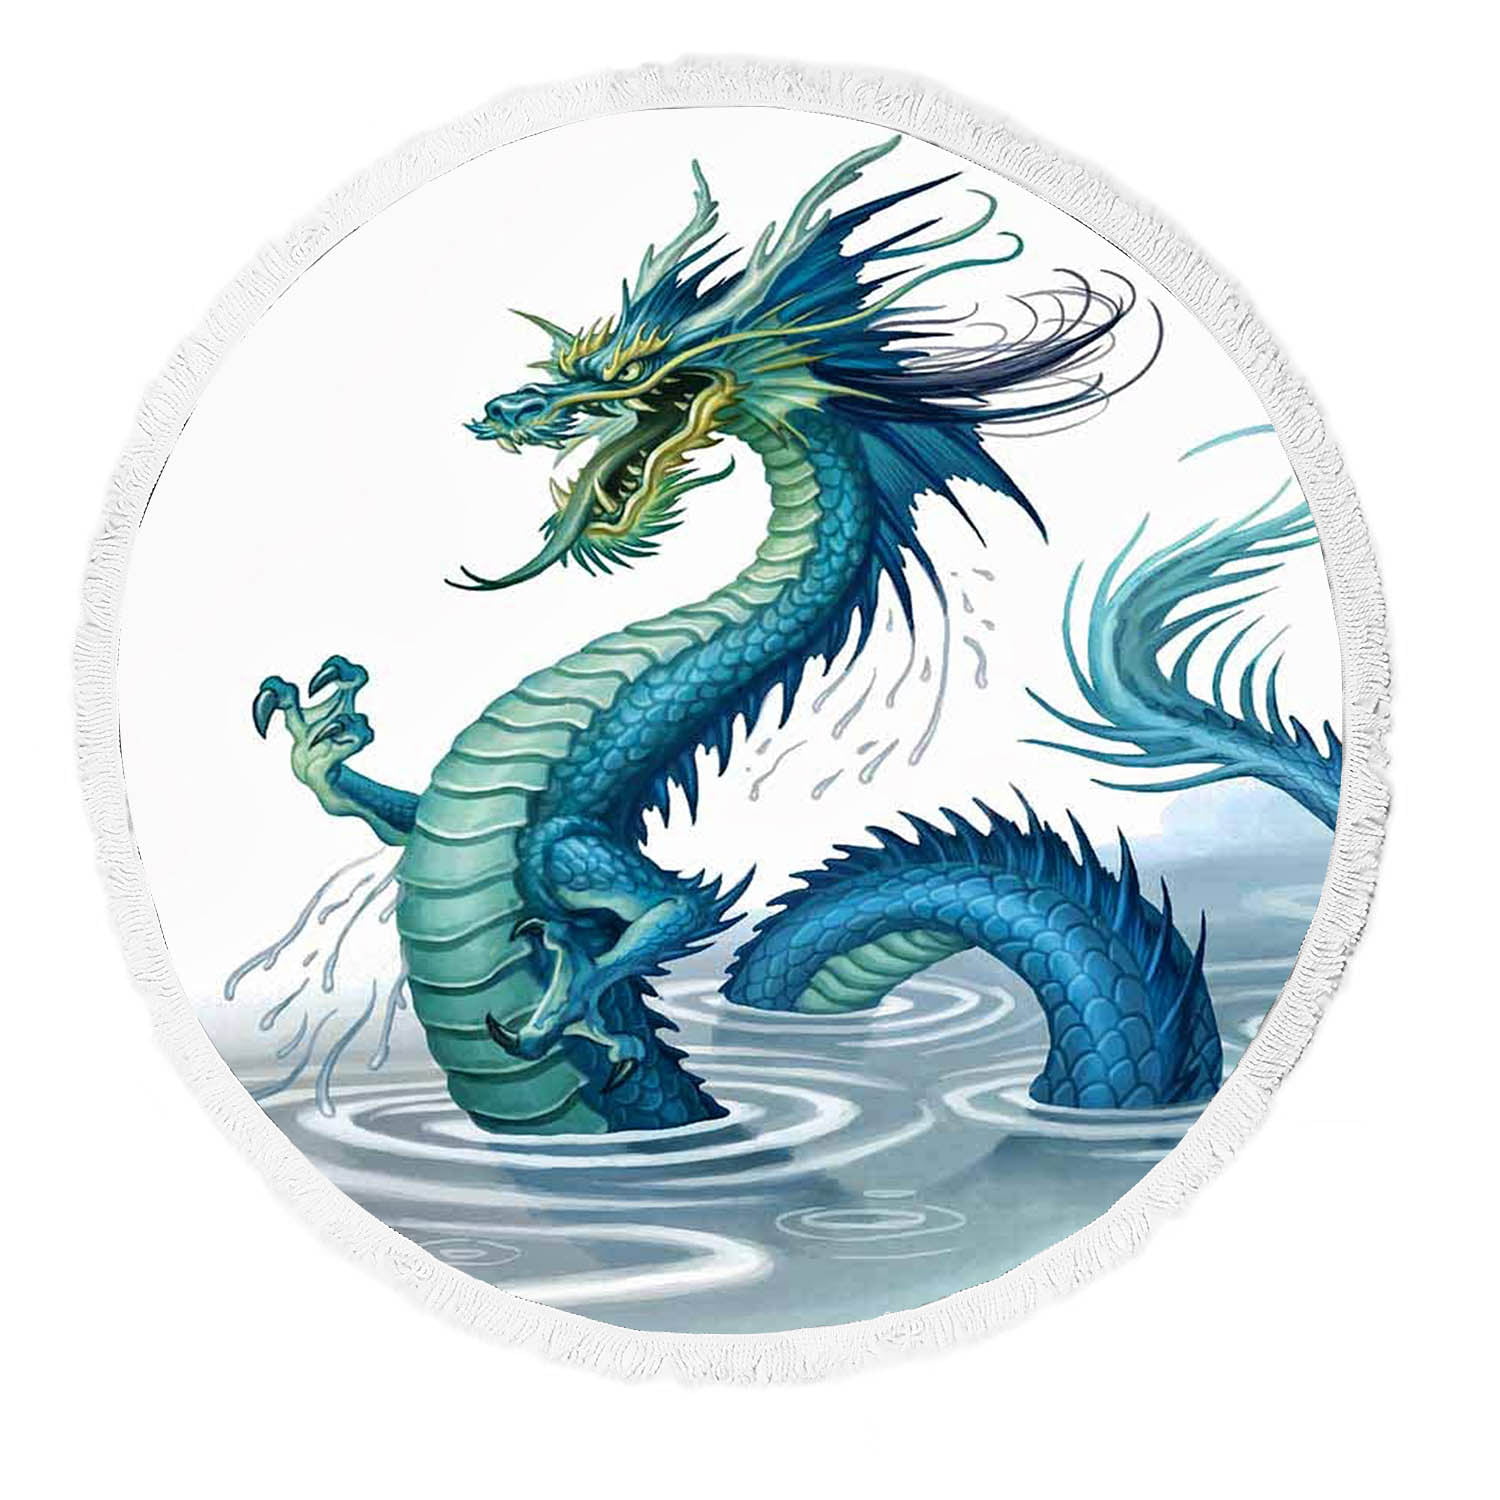 Полотенце с драконом. Лазурный дракон Китай. Полотенце банное с драконом. Полотенце с китайским драконом.